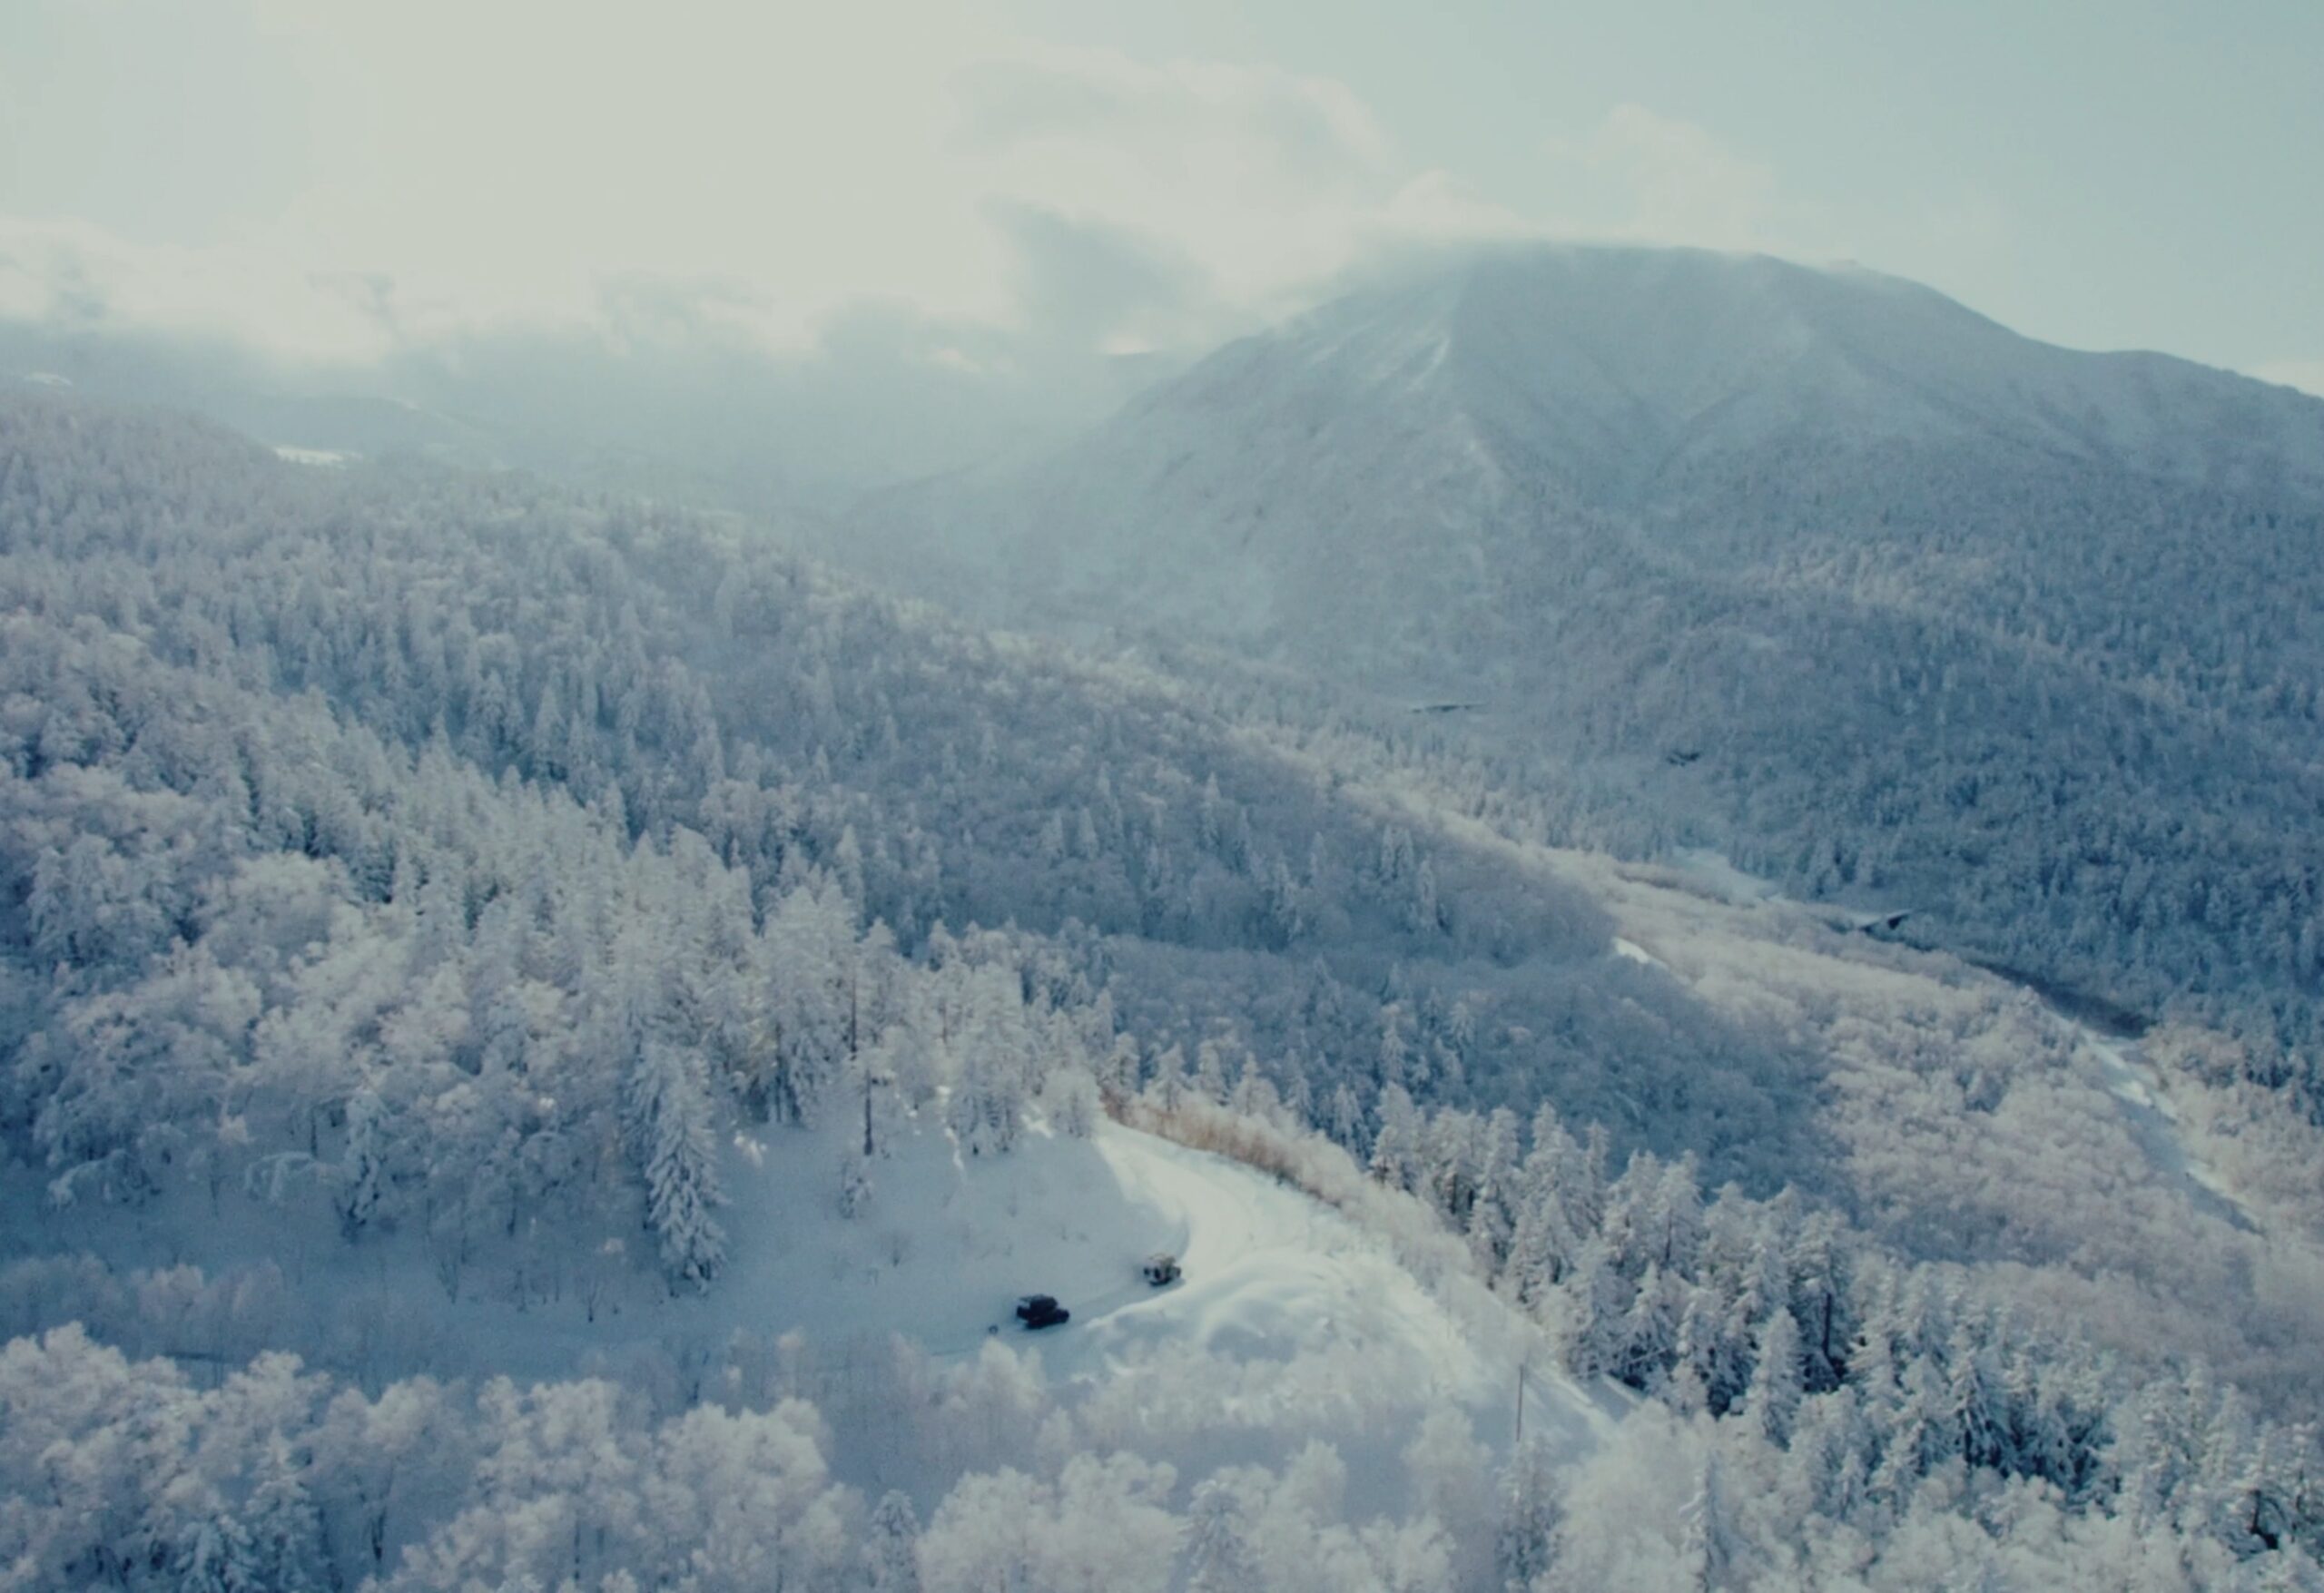 TOAL CAMPER SERVICE “Winter Season Film”